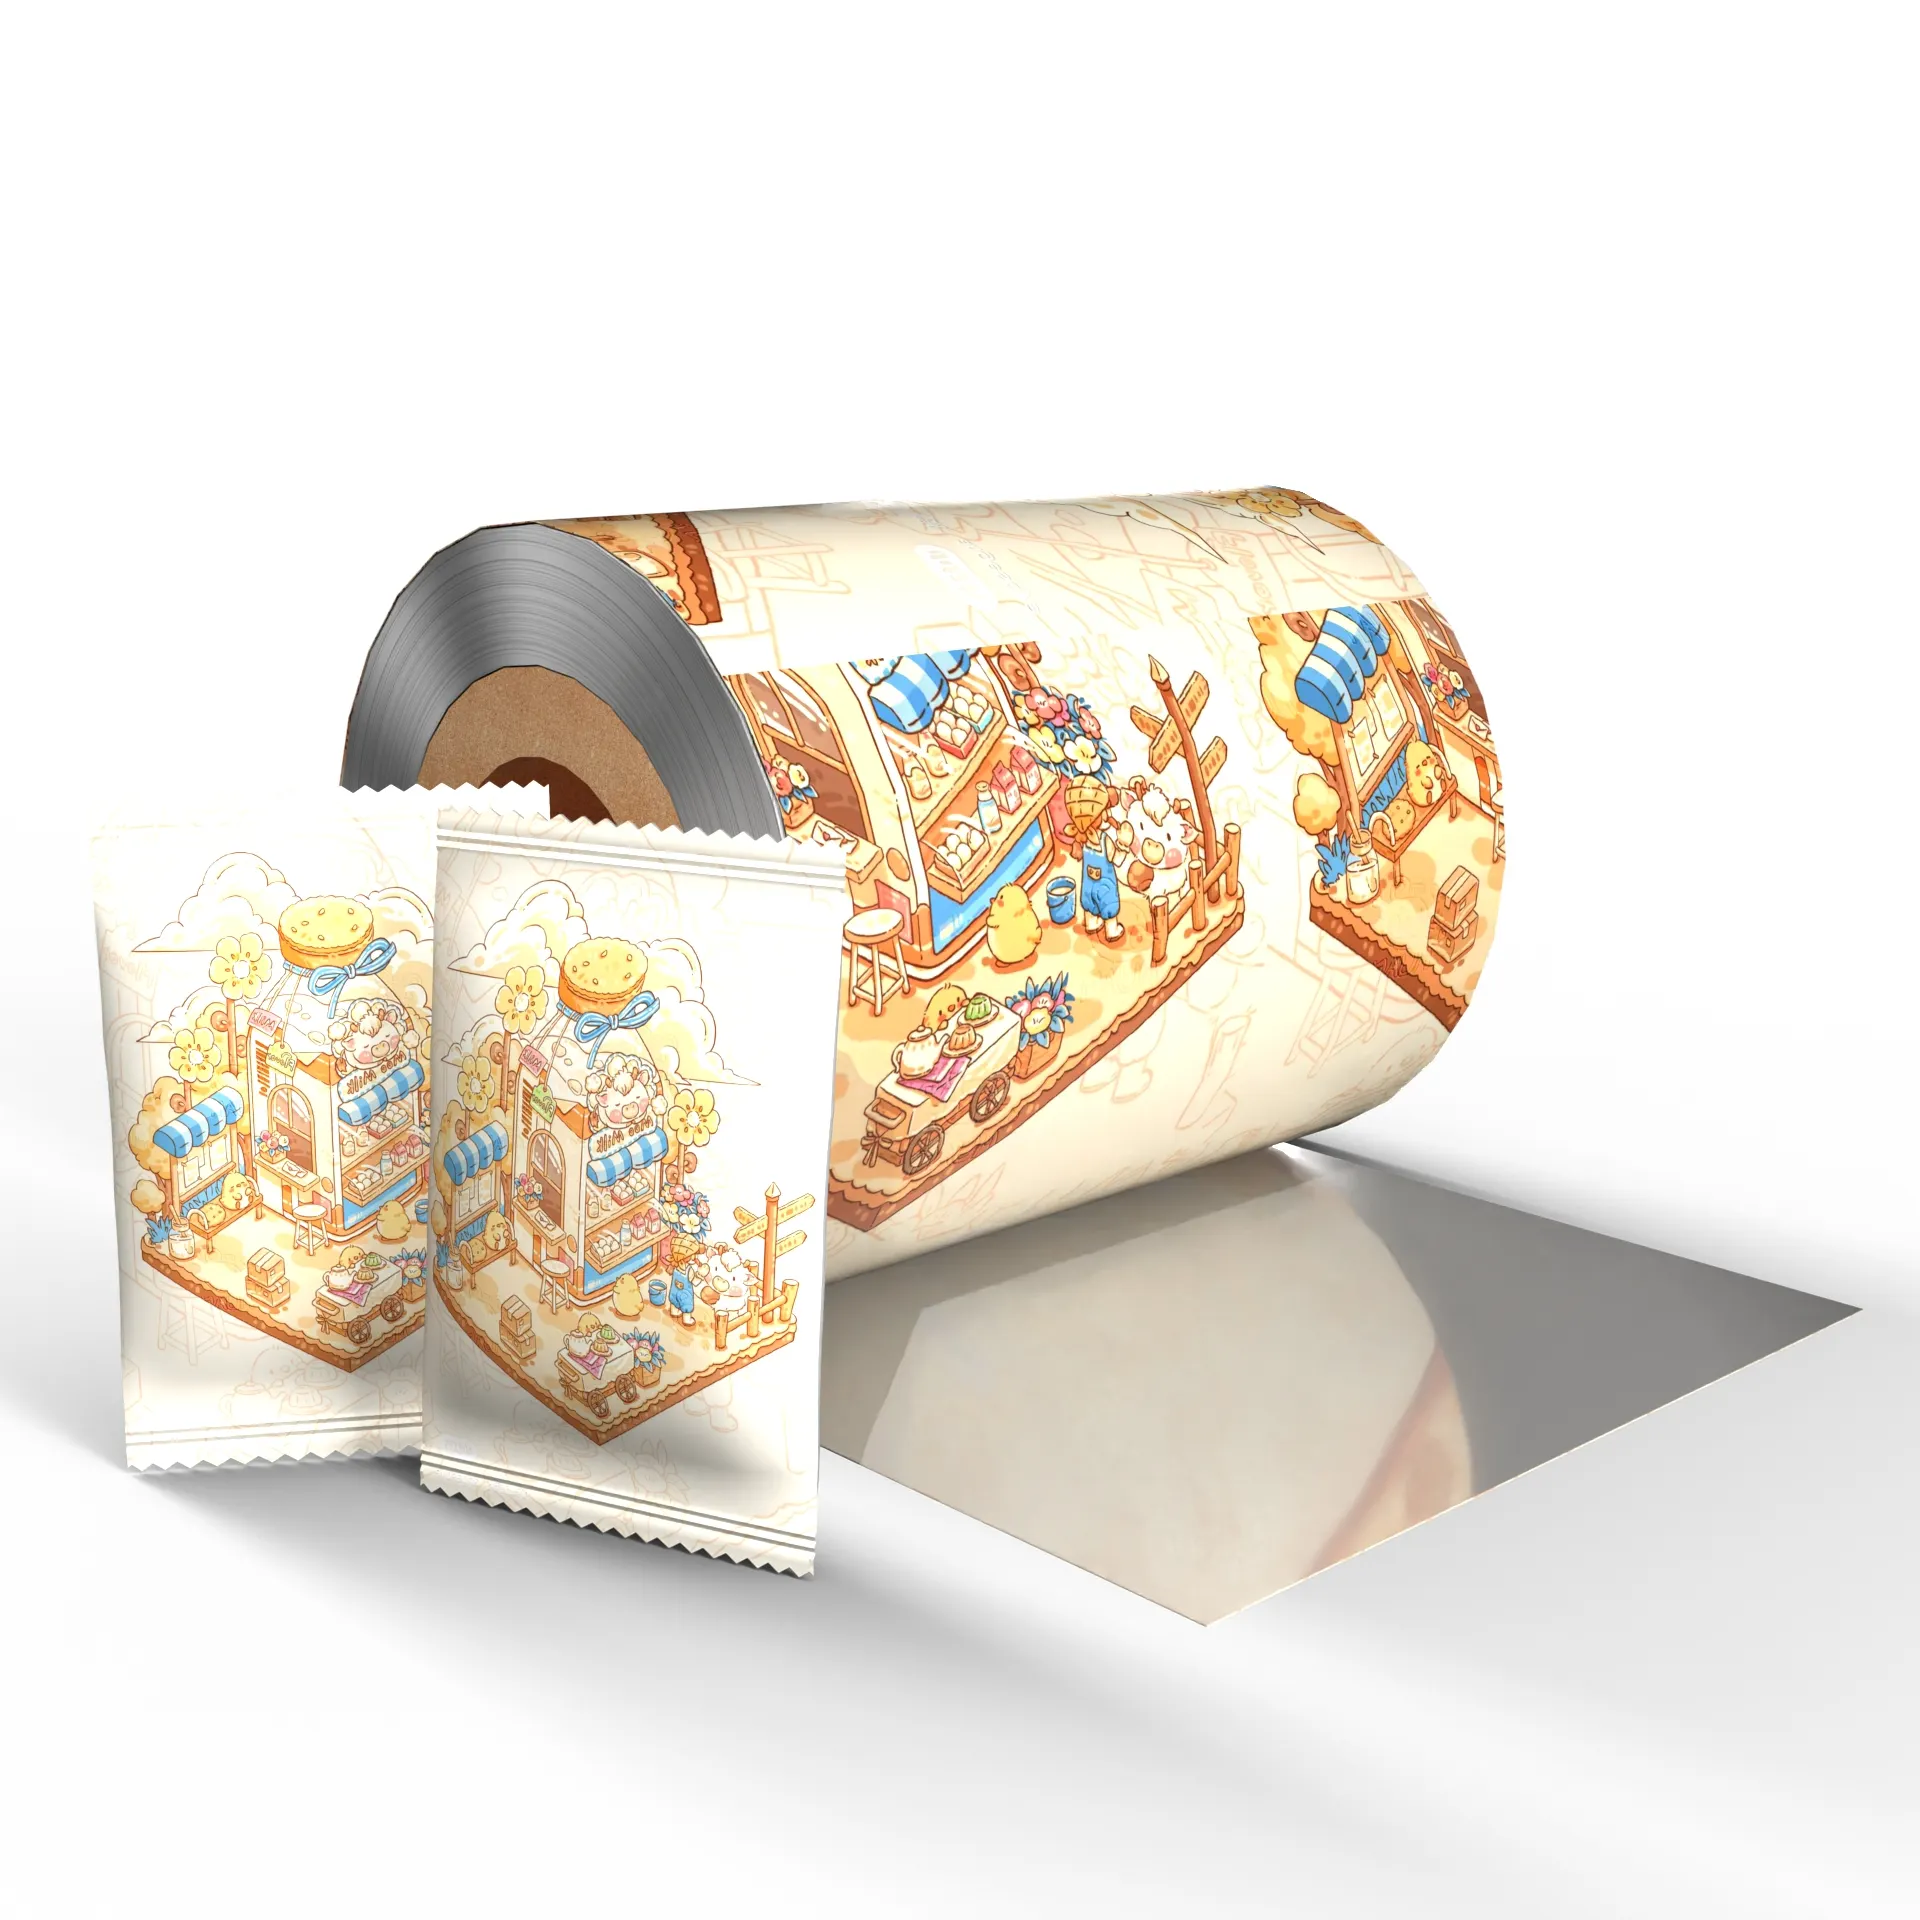 Laminated PE Stretch Film Jumbo Roll Packaging Plastic Film Packaging Plastic Candy Roll Film